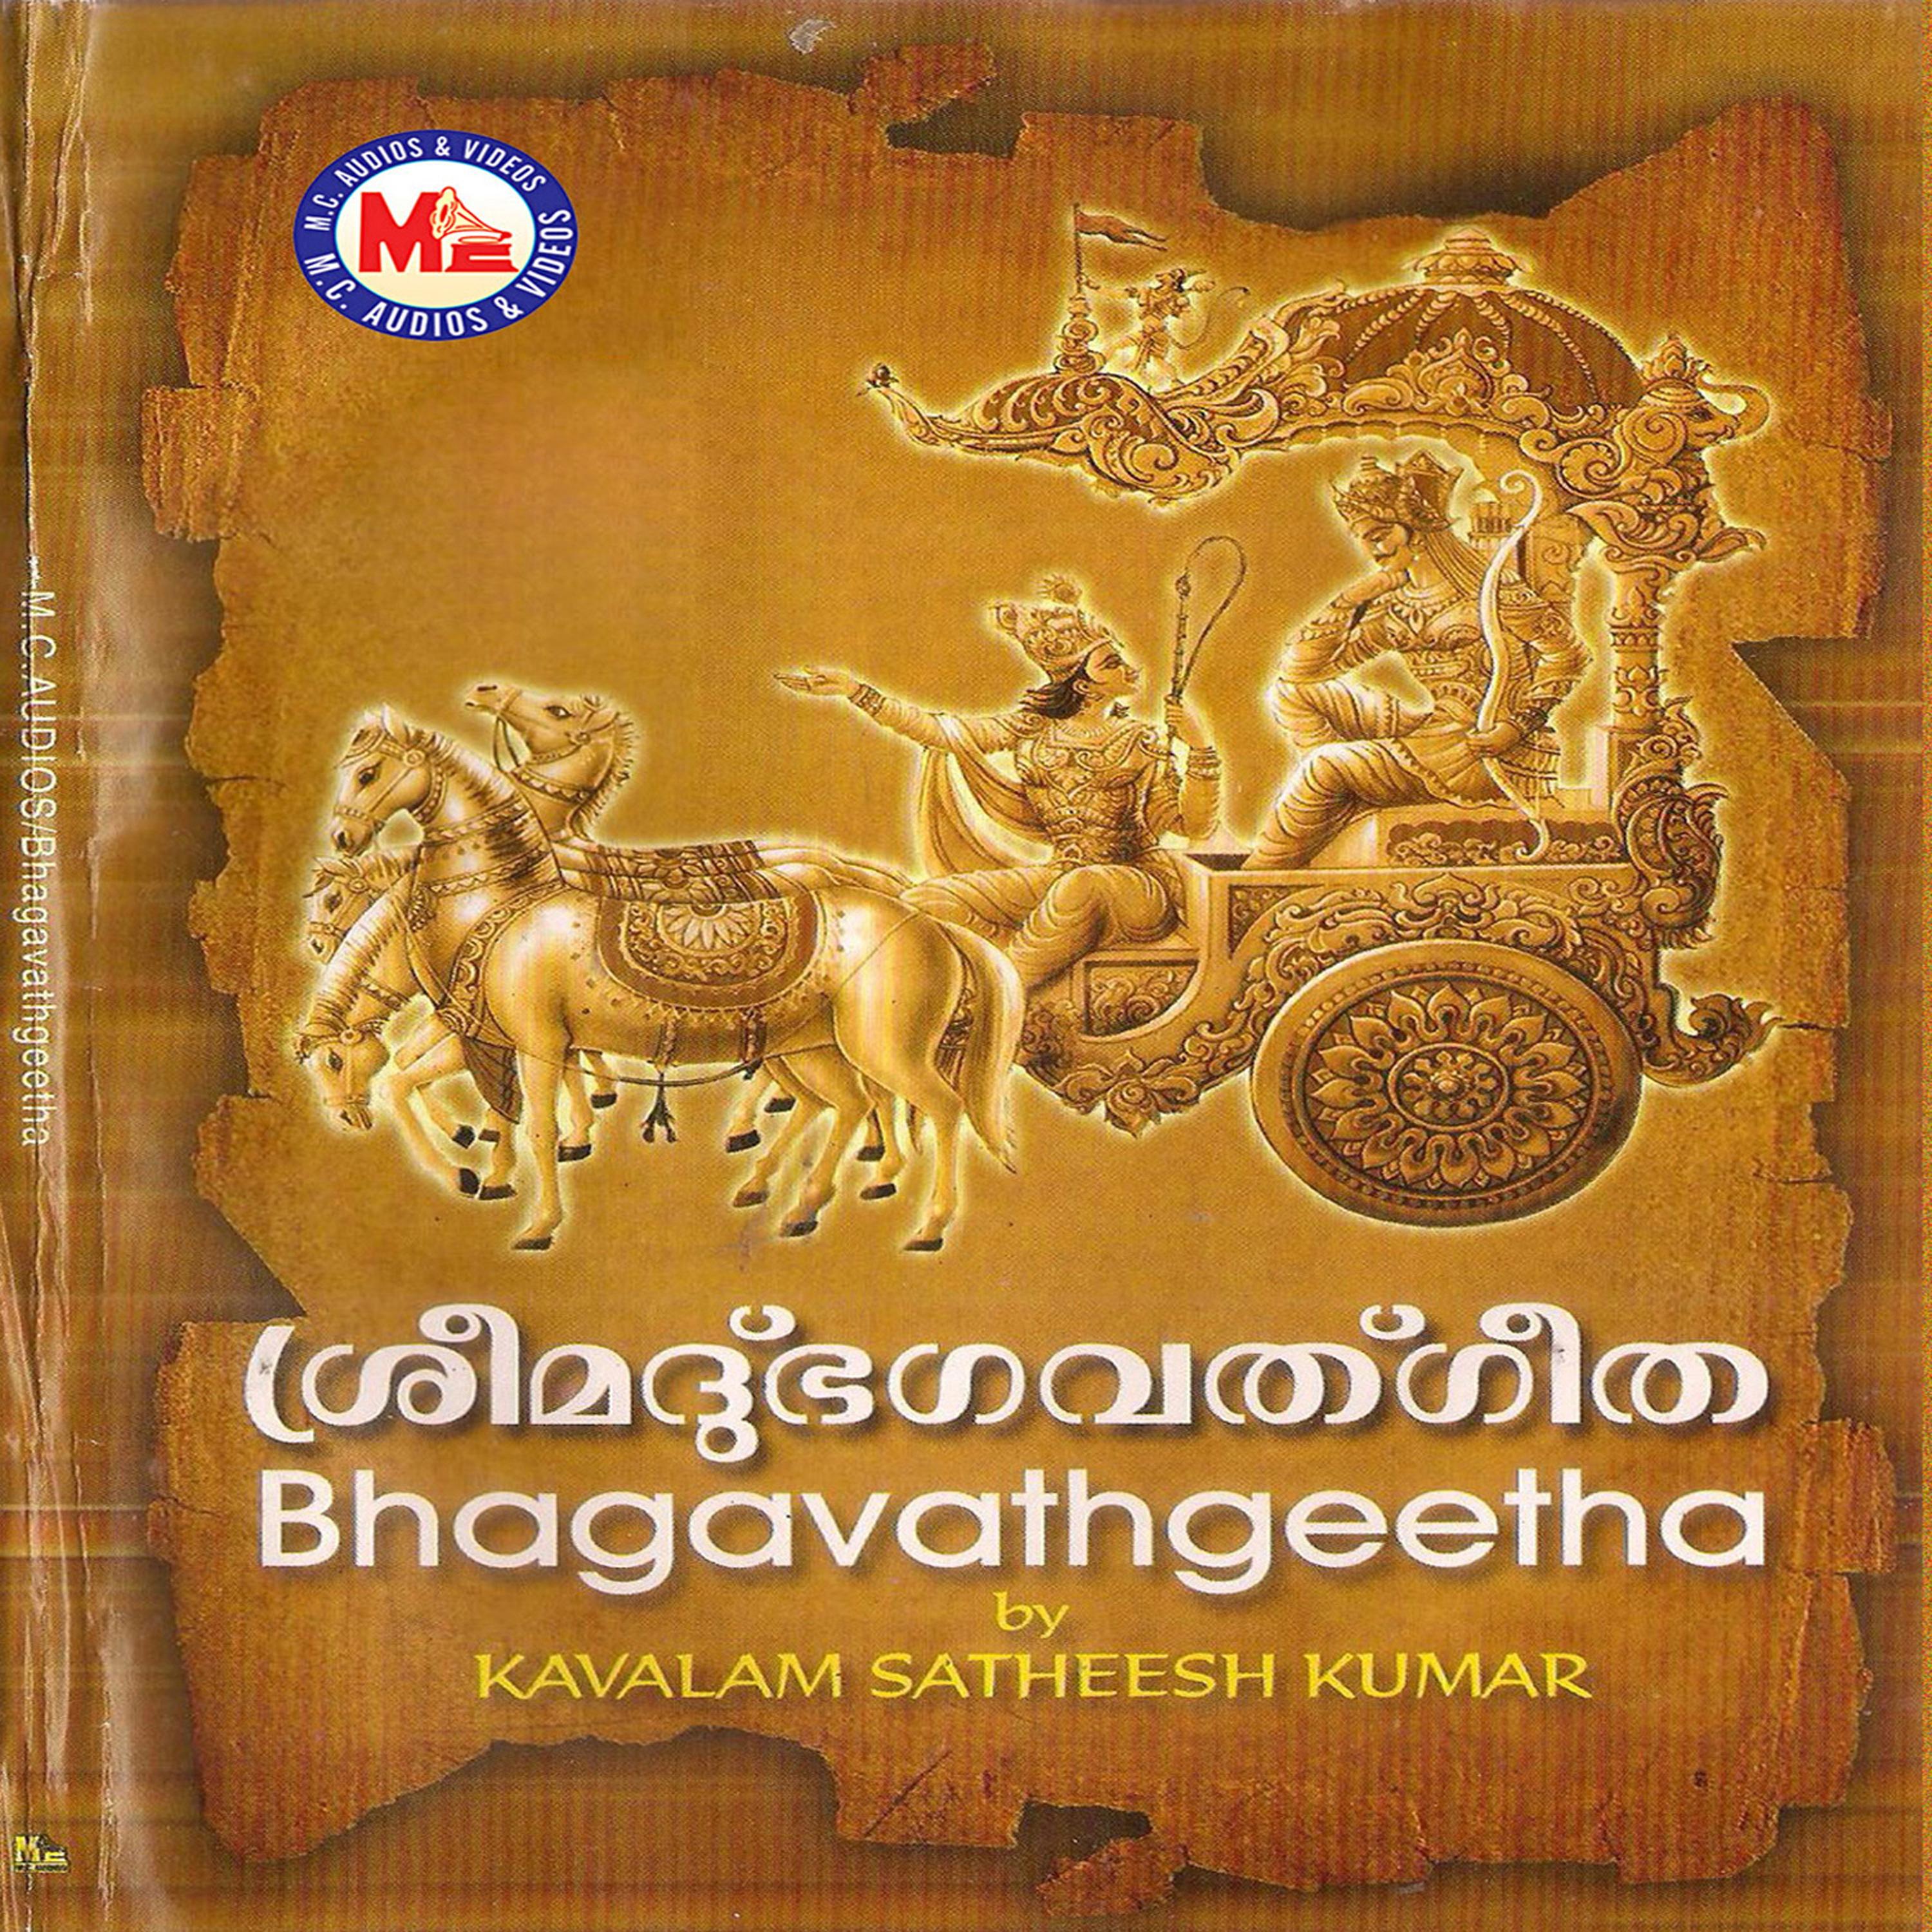 Bhagavathgeetha